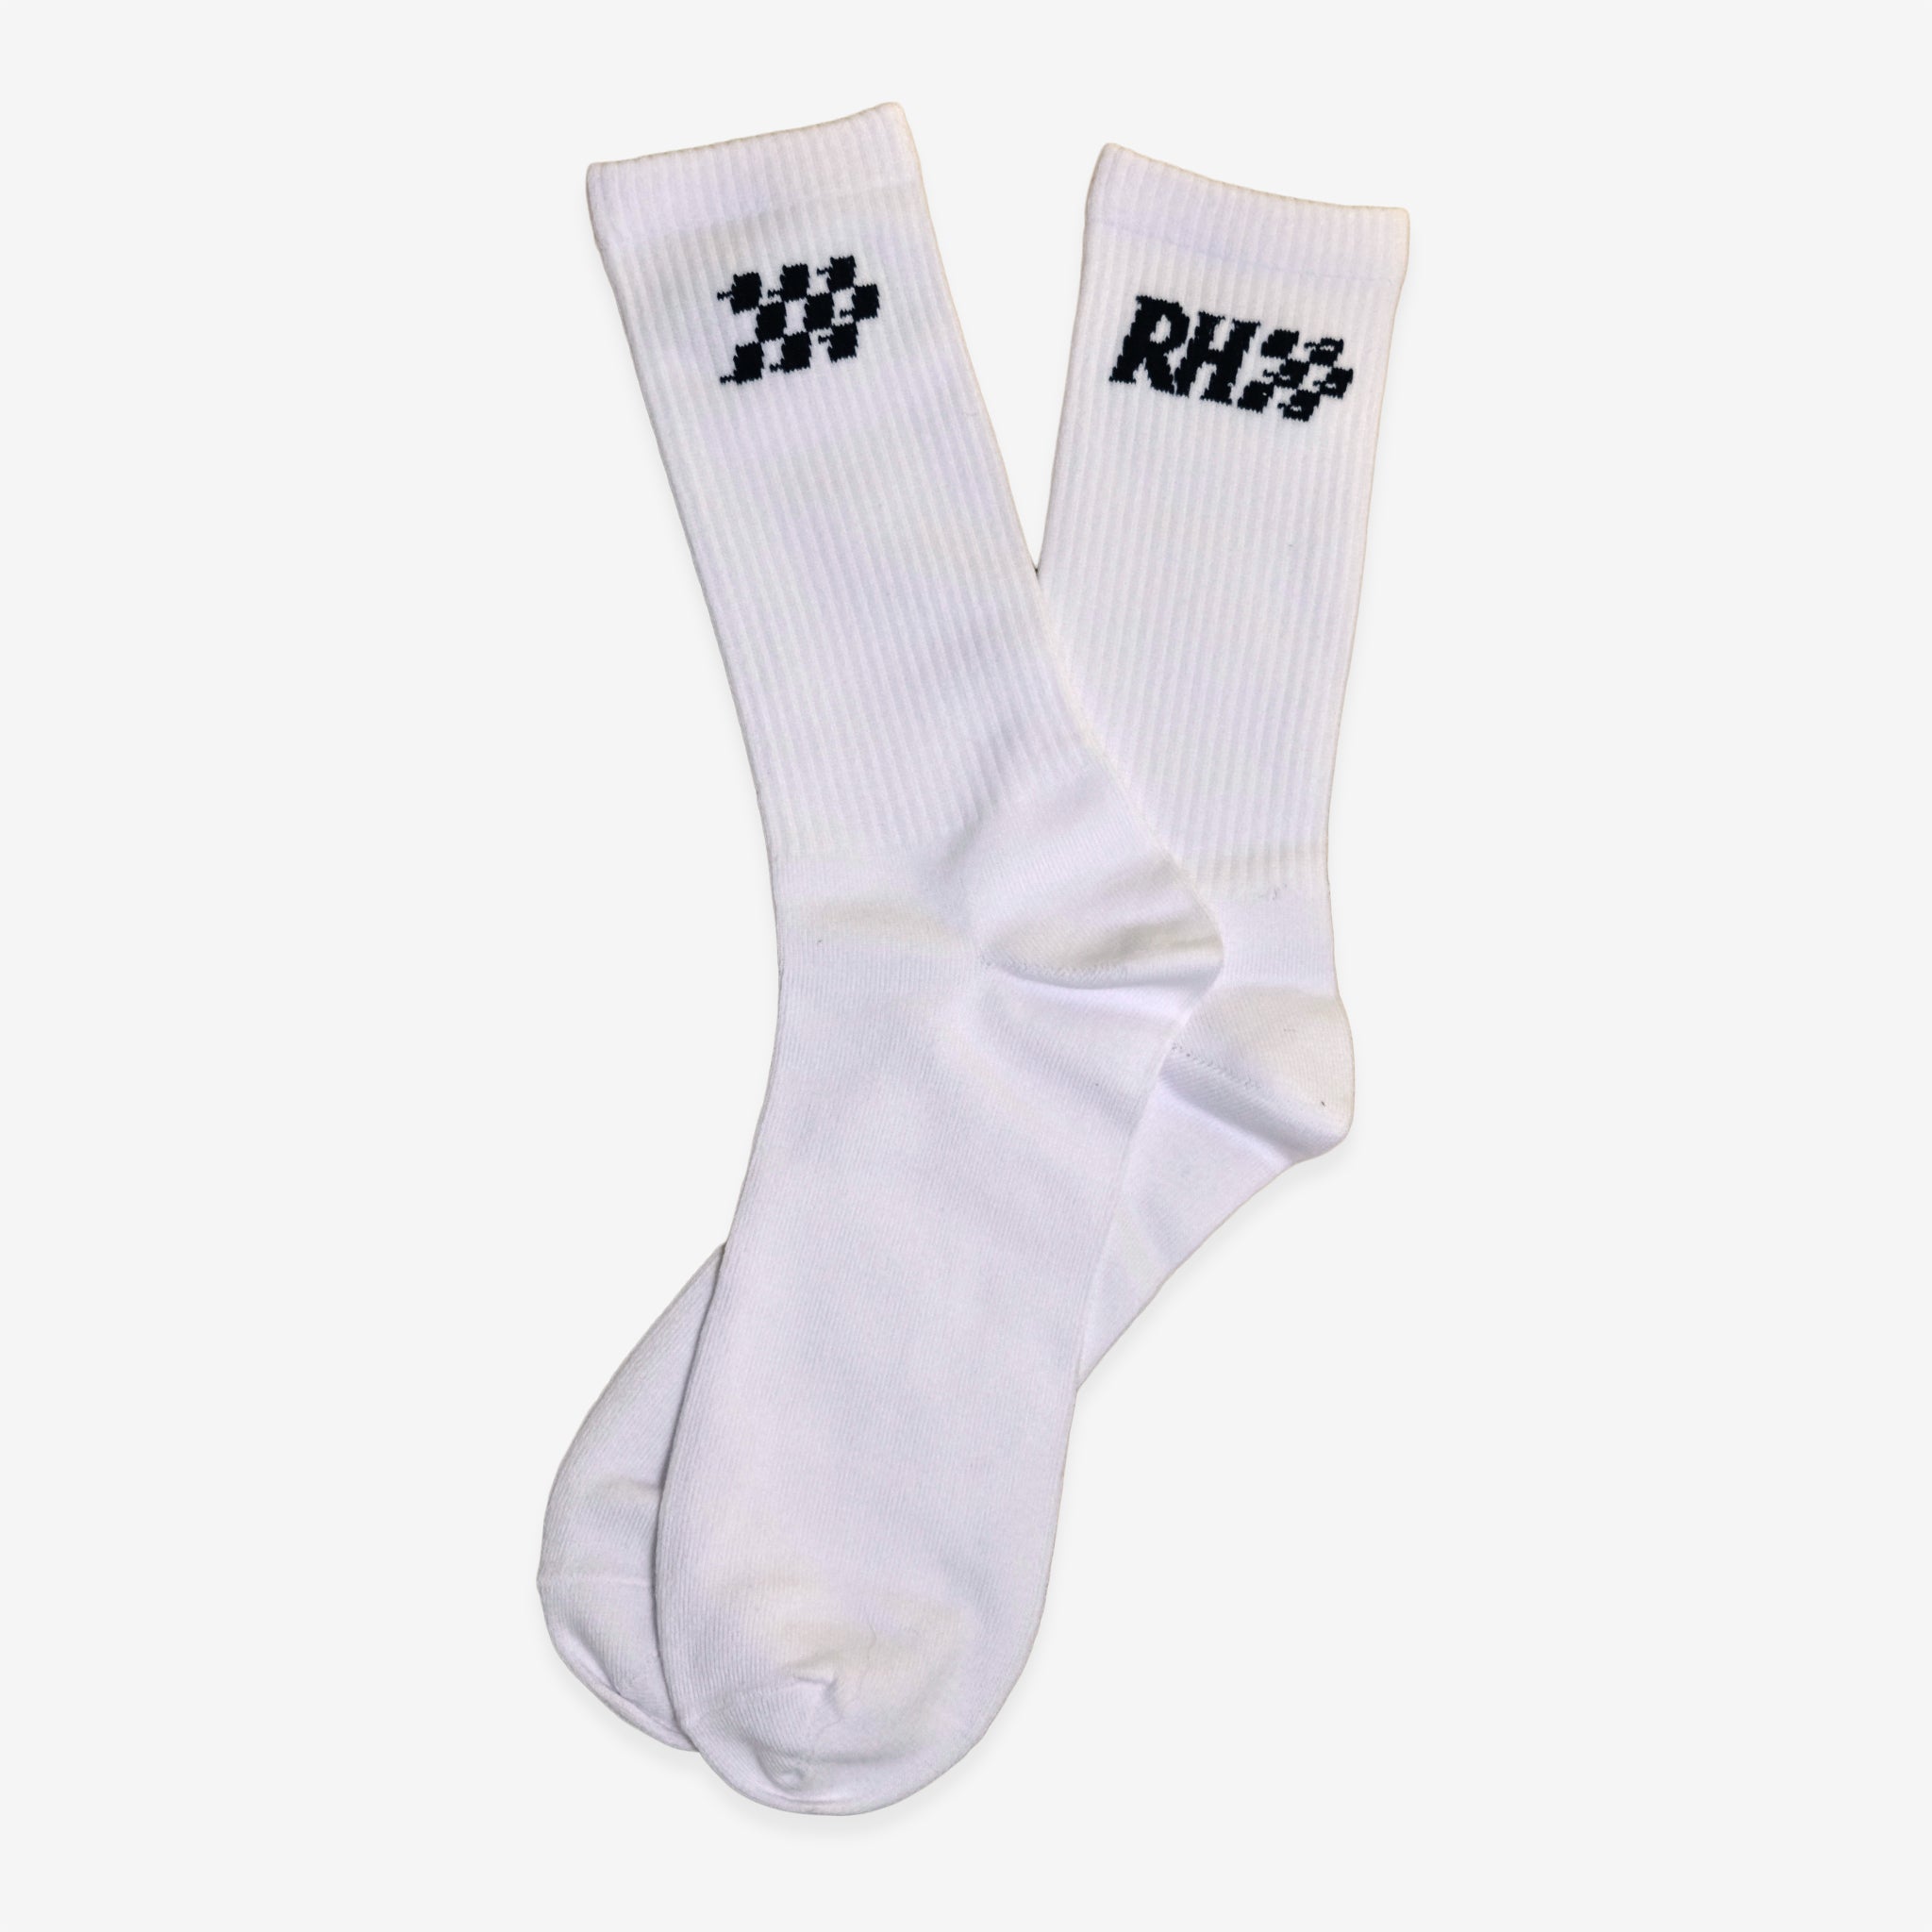 Essentials Crew Socks - RH Flag